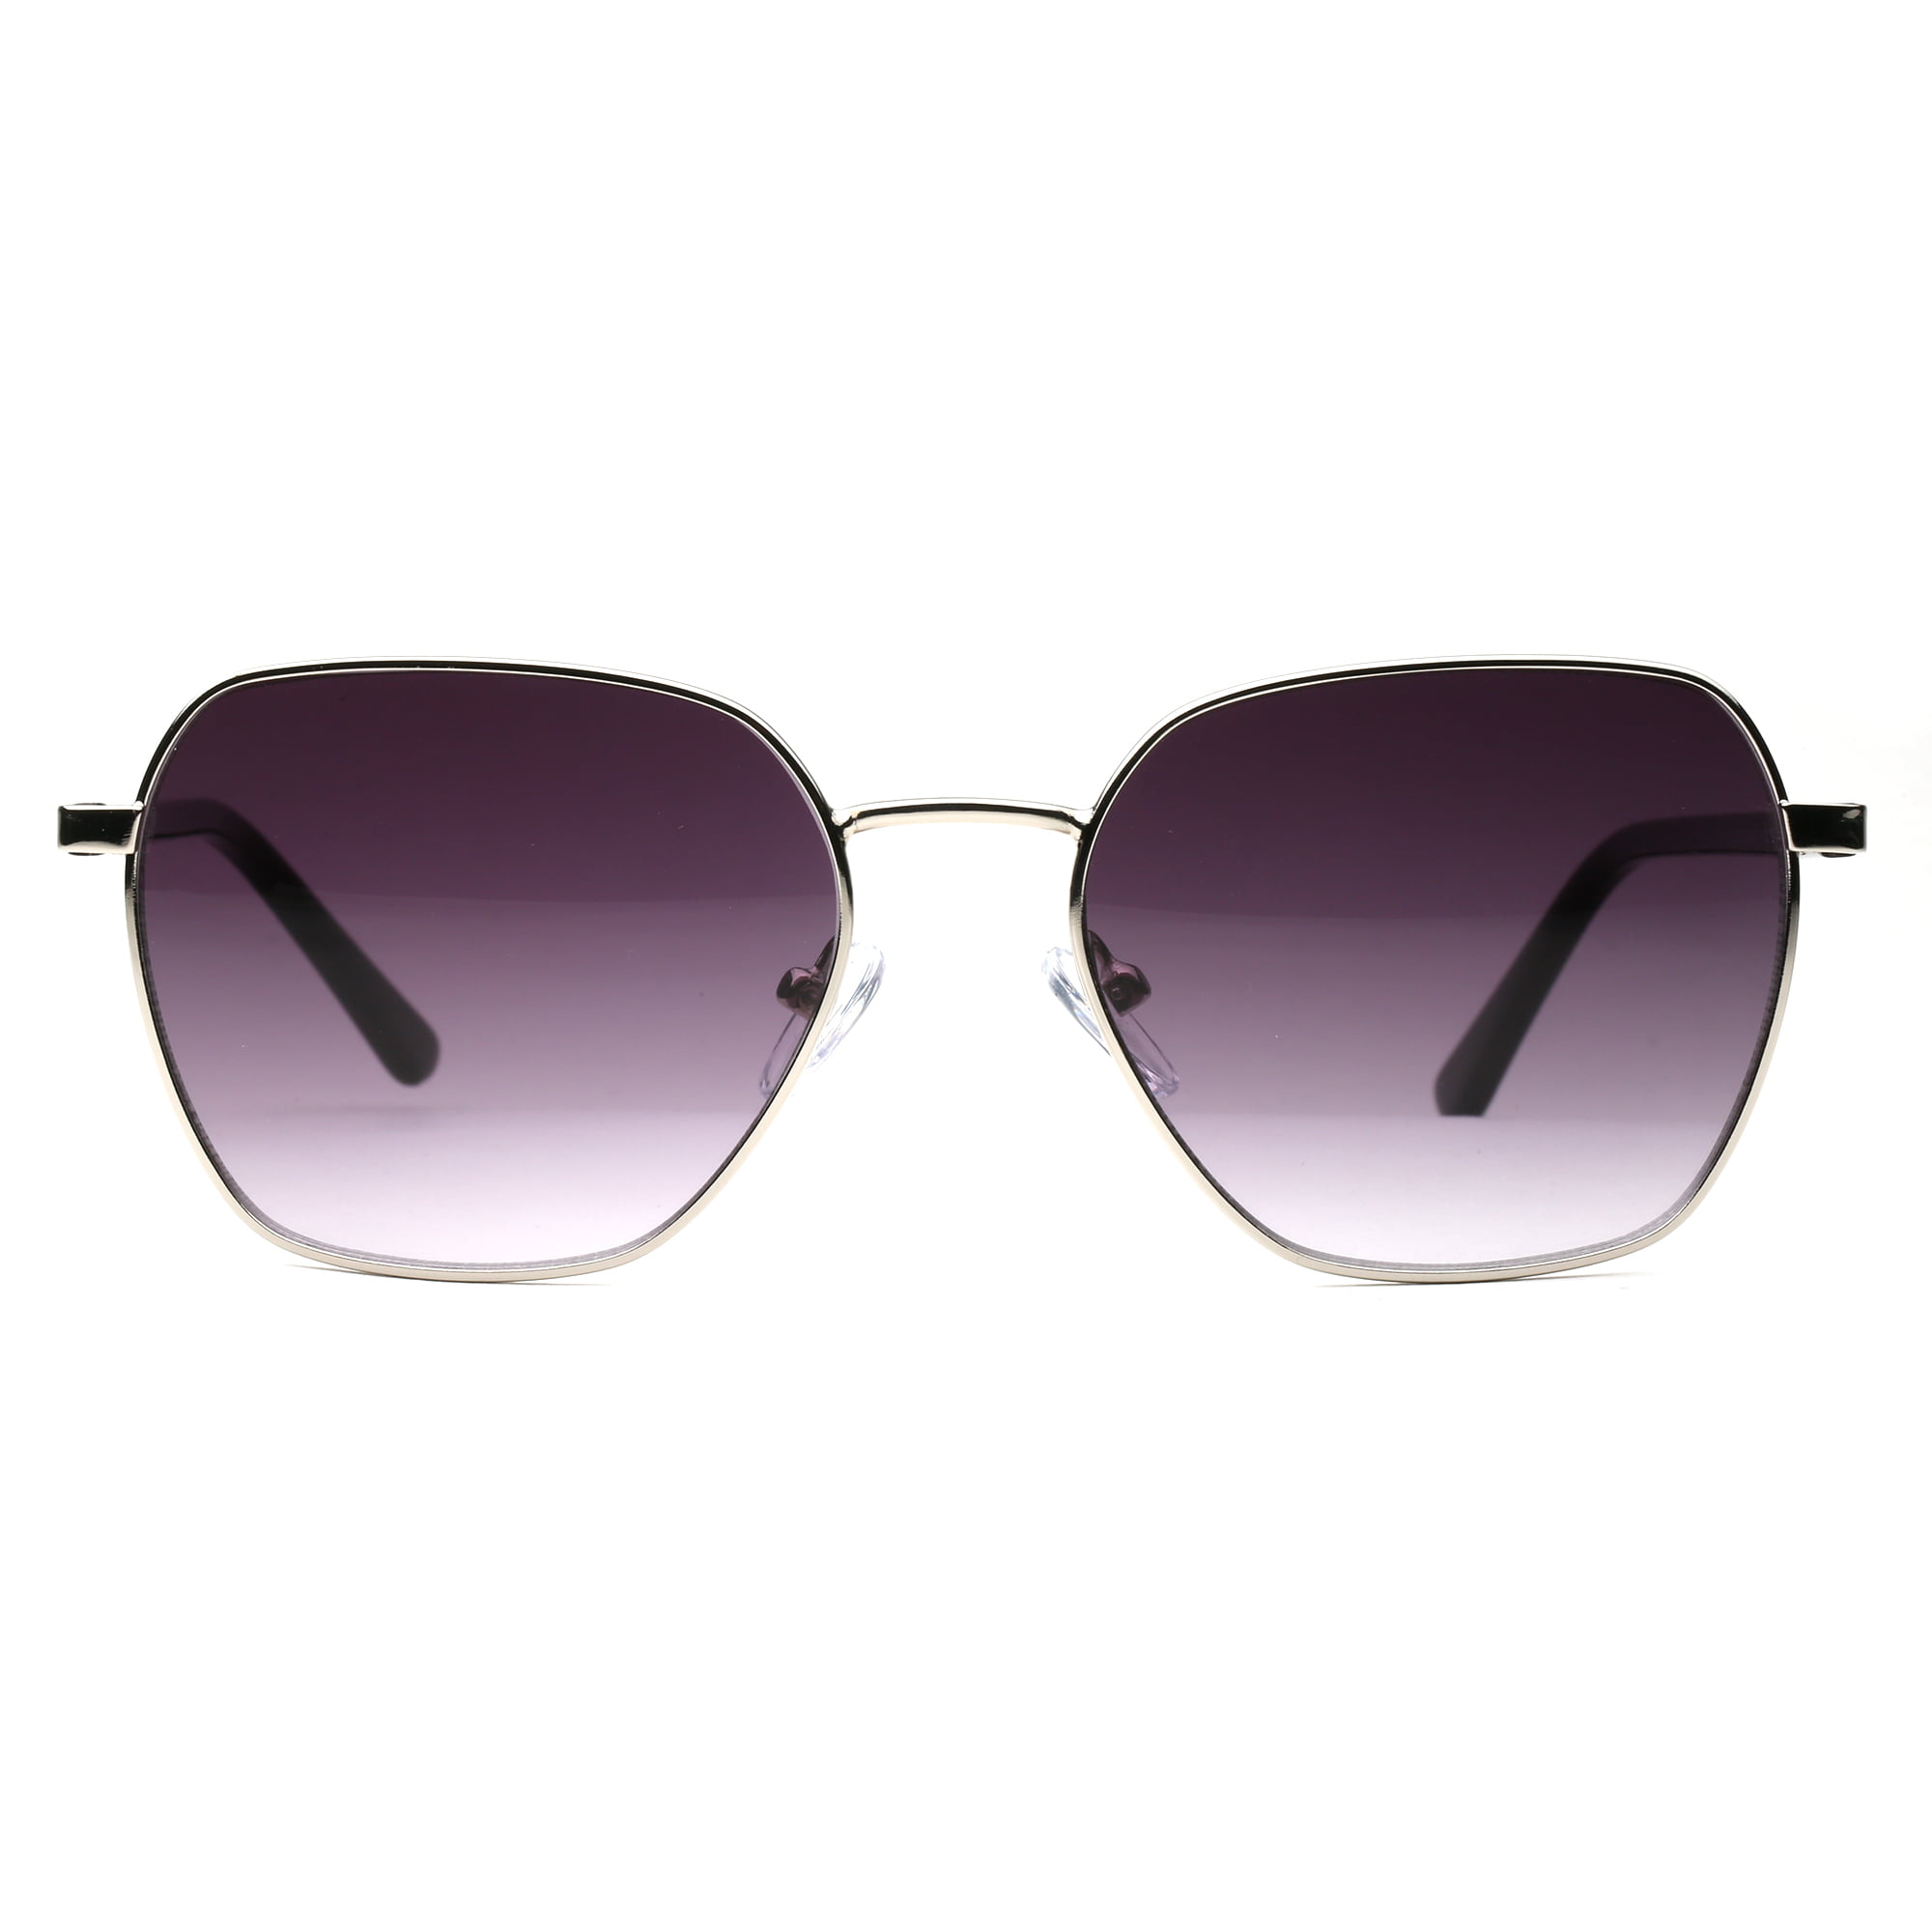 Silver Geometric Square Sunglasses for Women Men, UV Protection 53